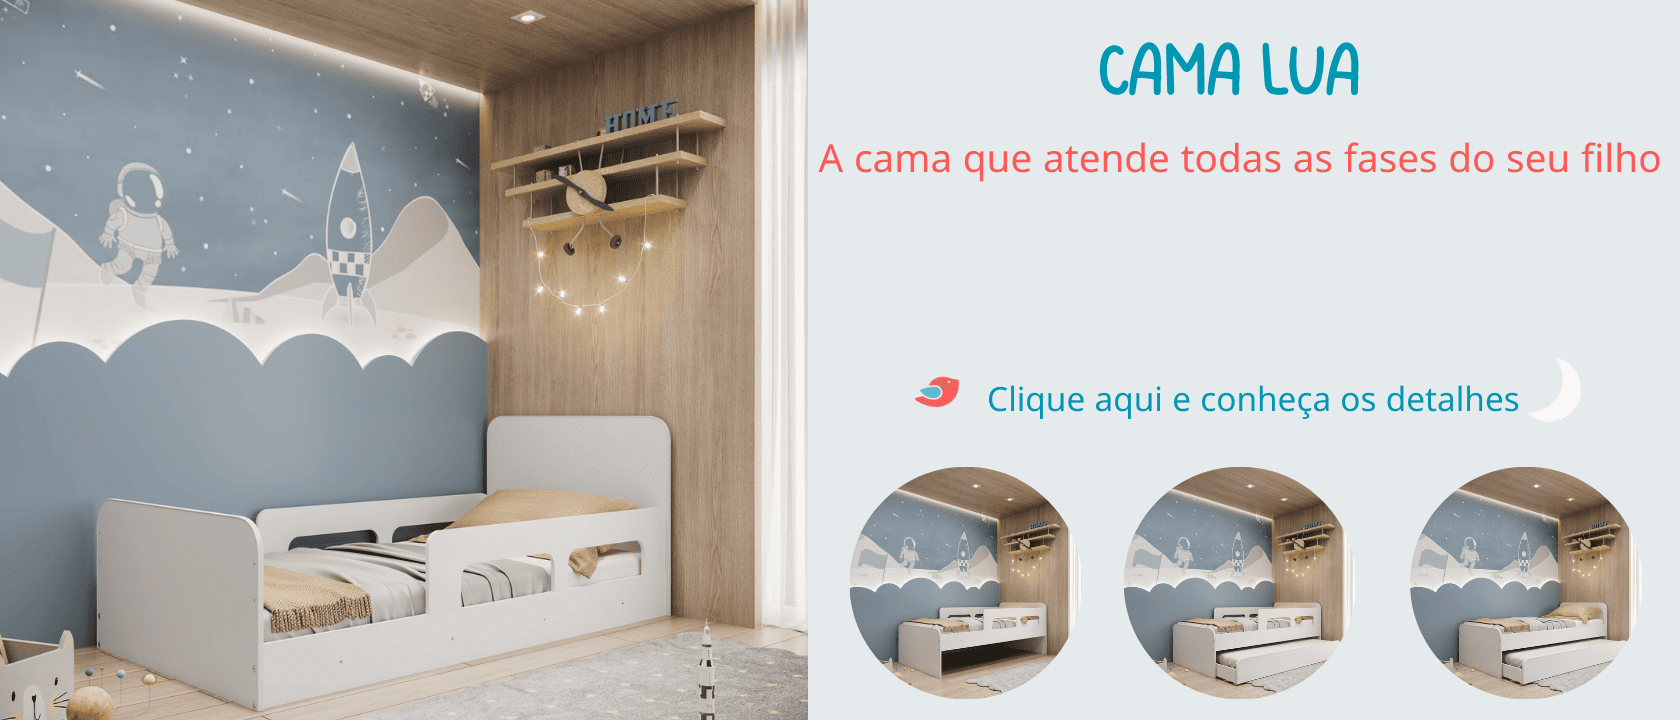 cama-lua-banner-desktop-1